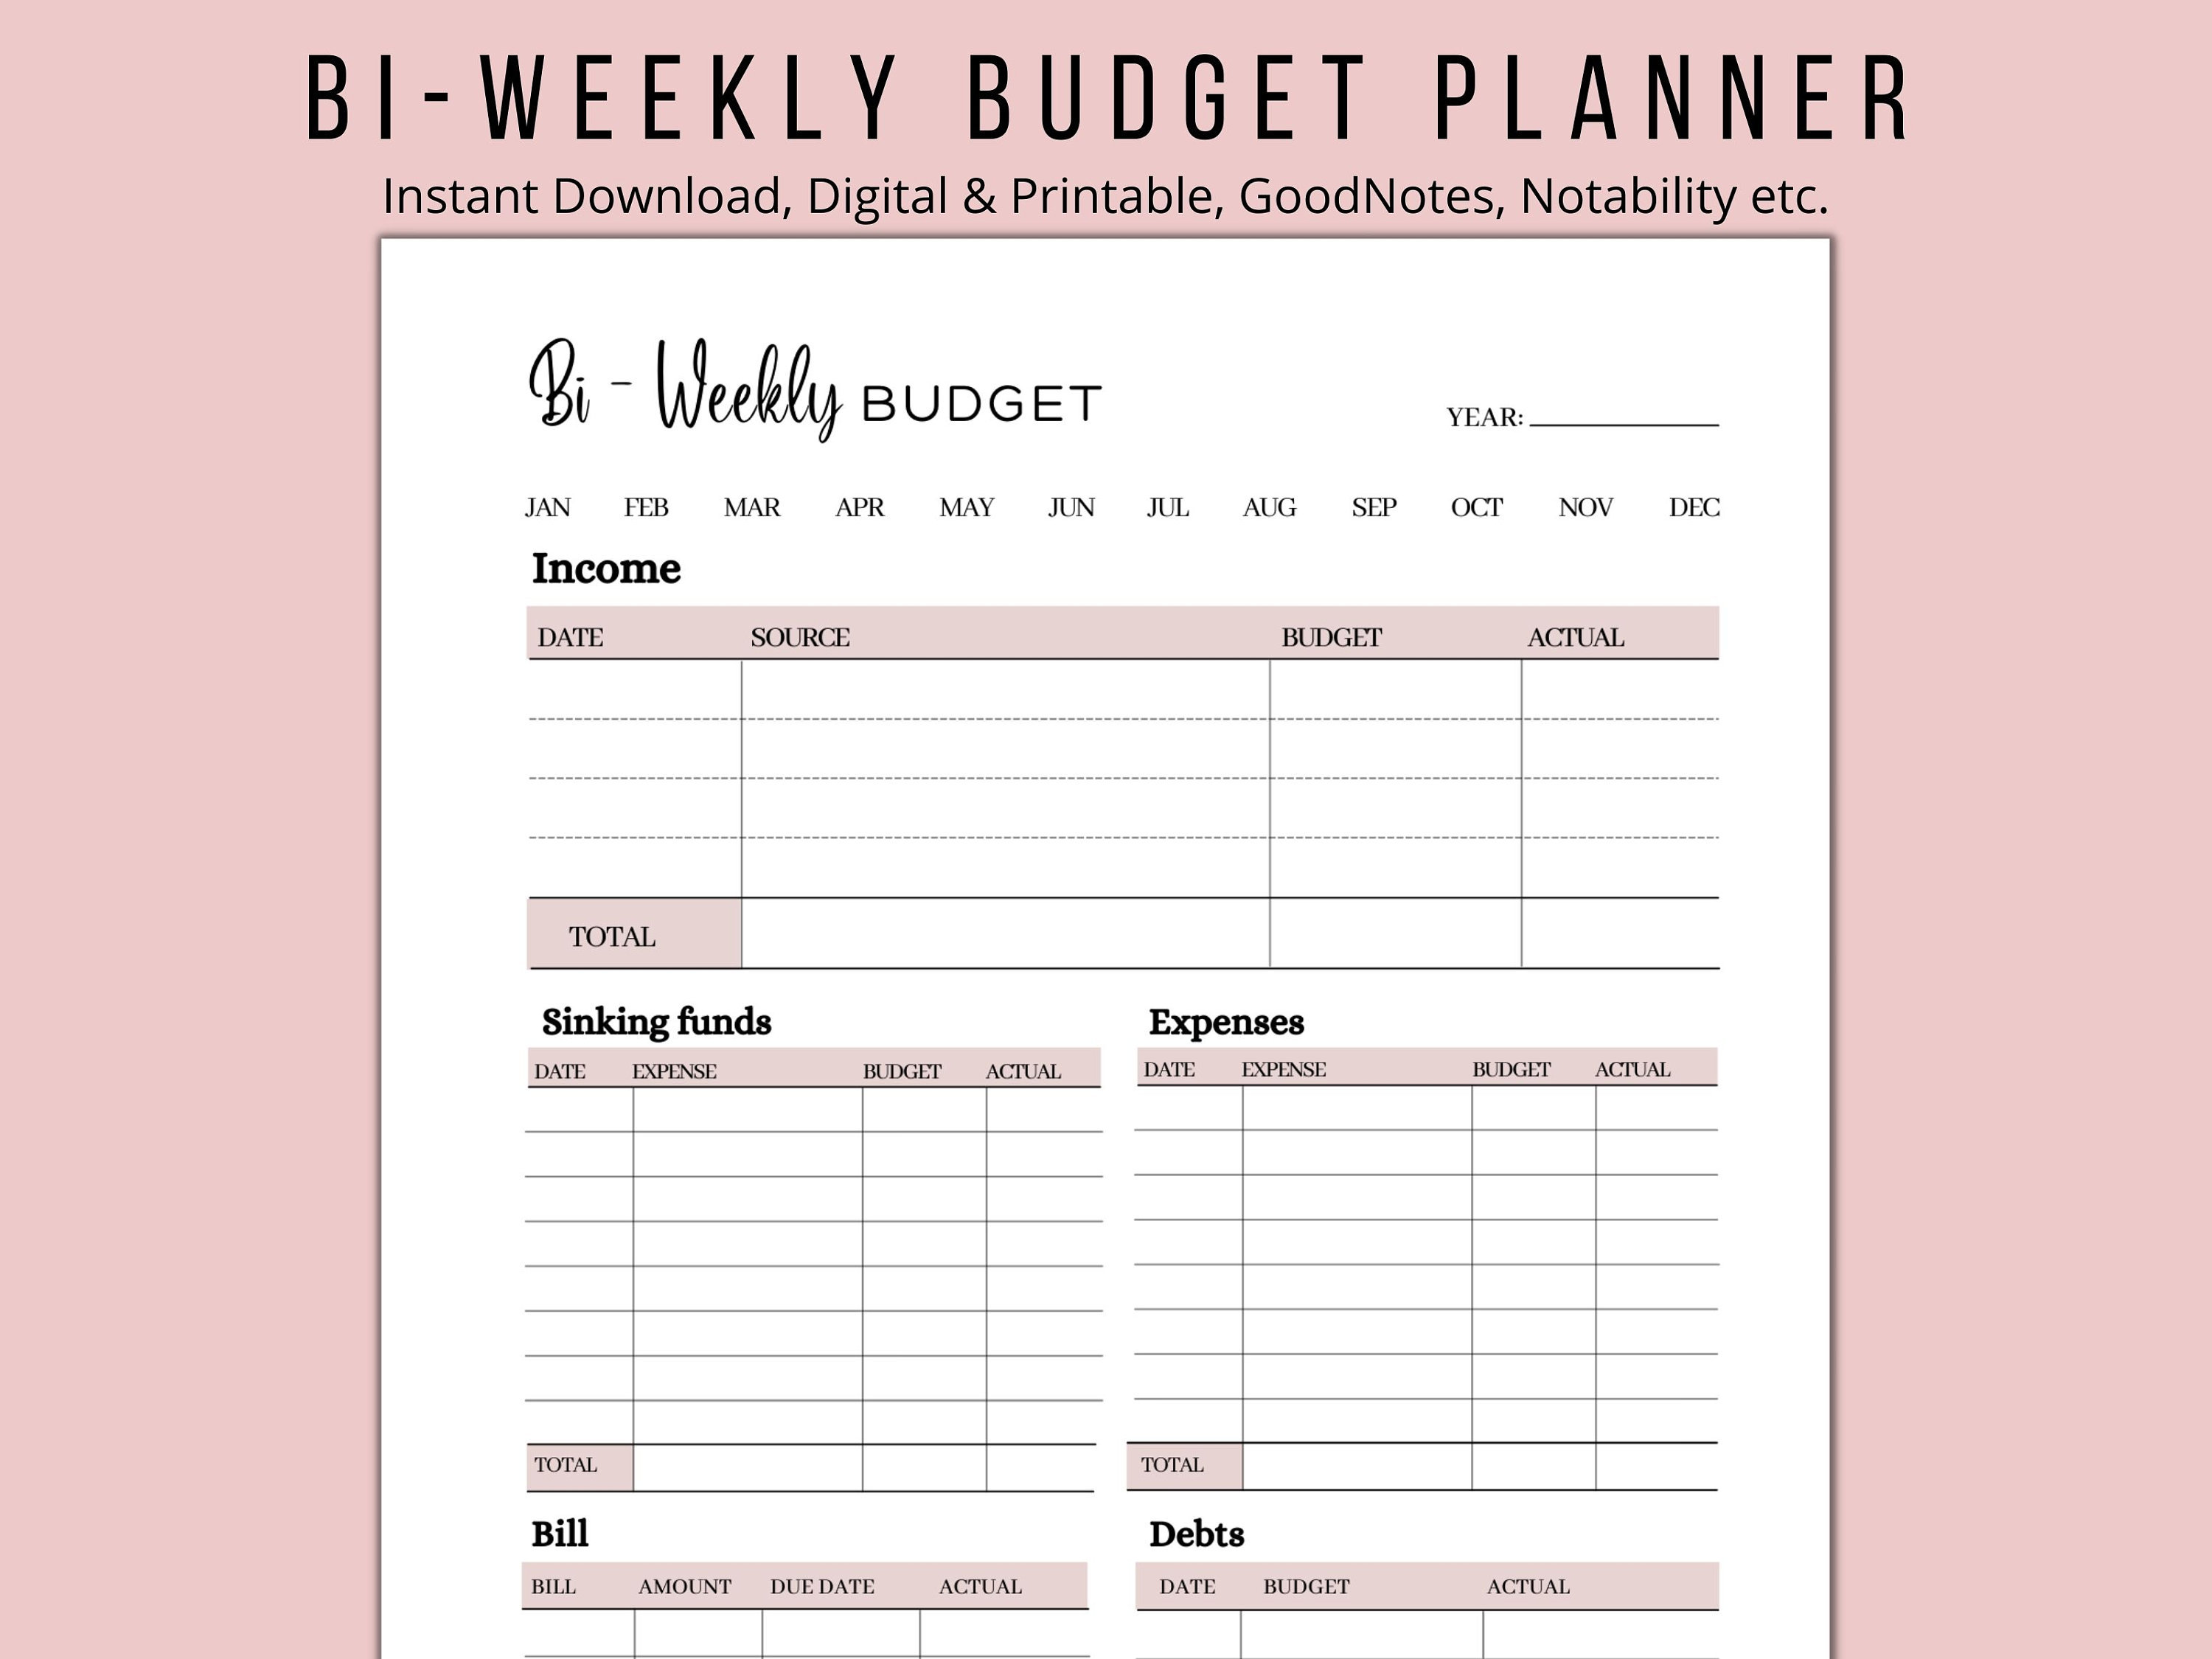 Bi-weekly Budget Planner, Digital, Printable, Goodnotes, Instant